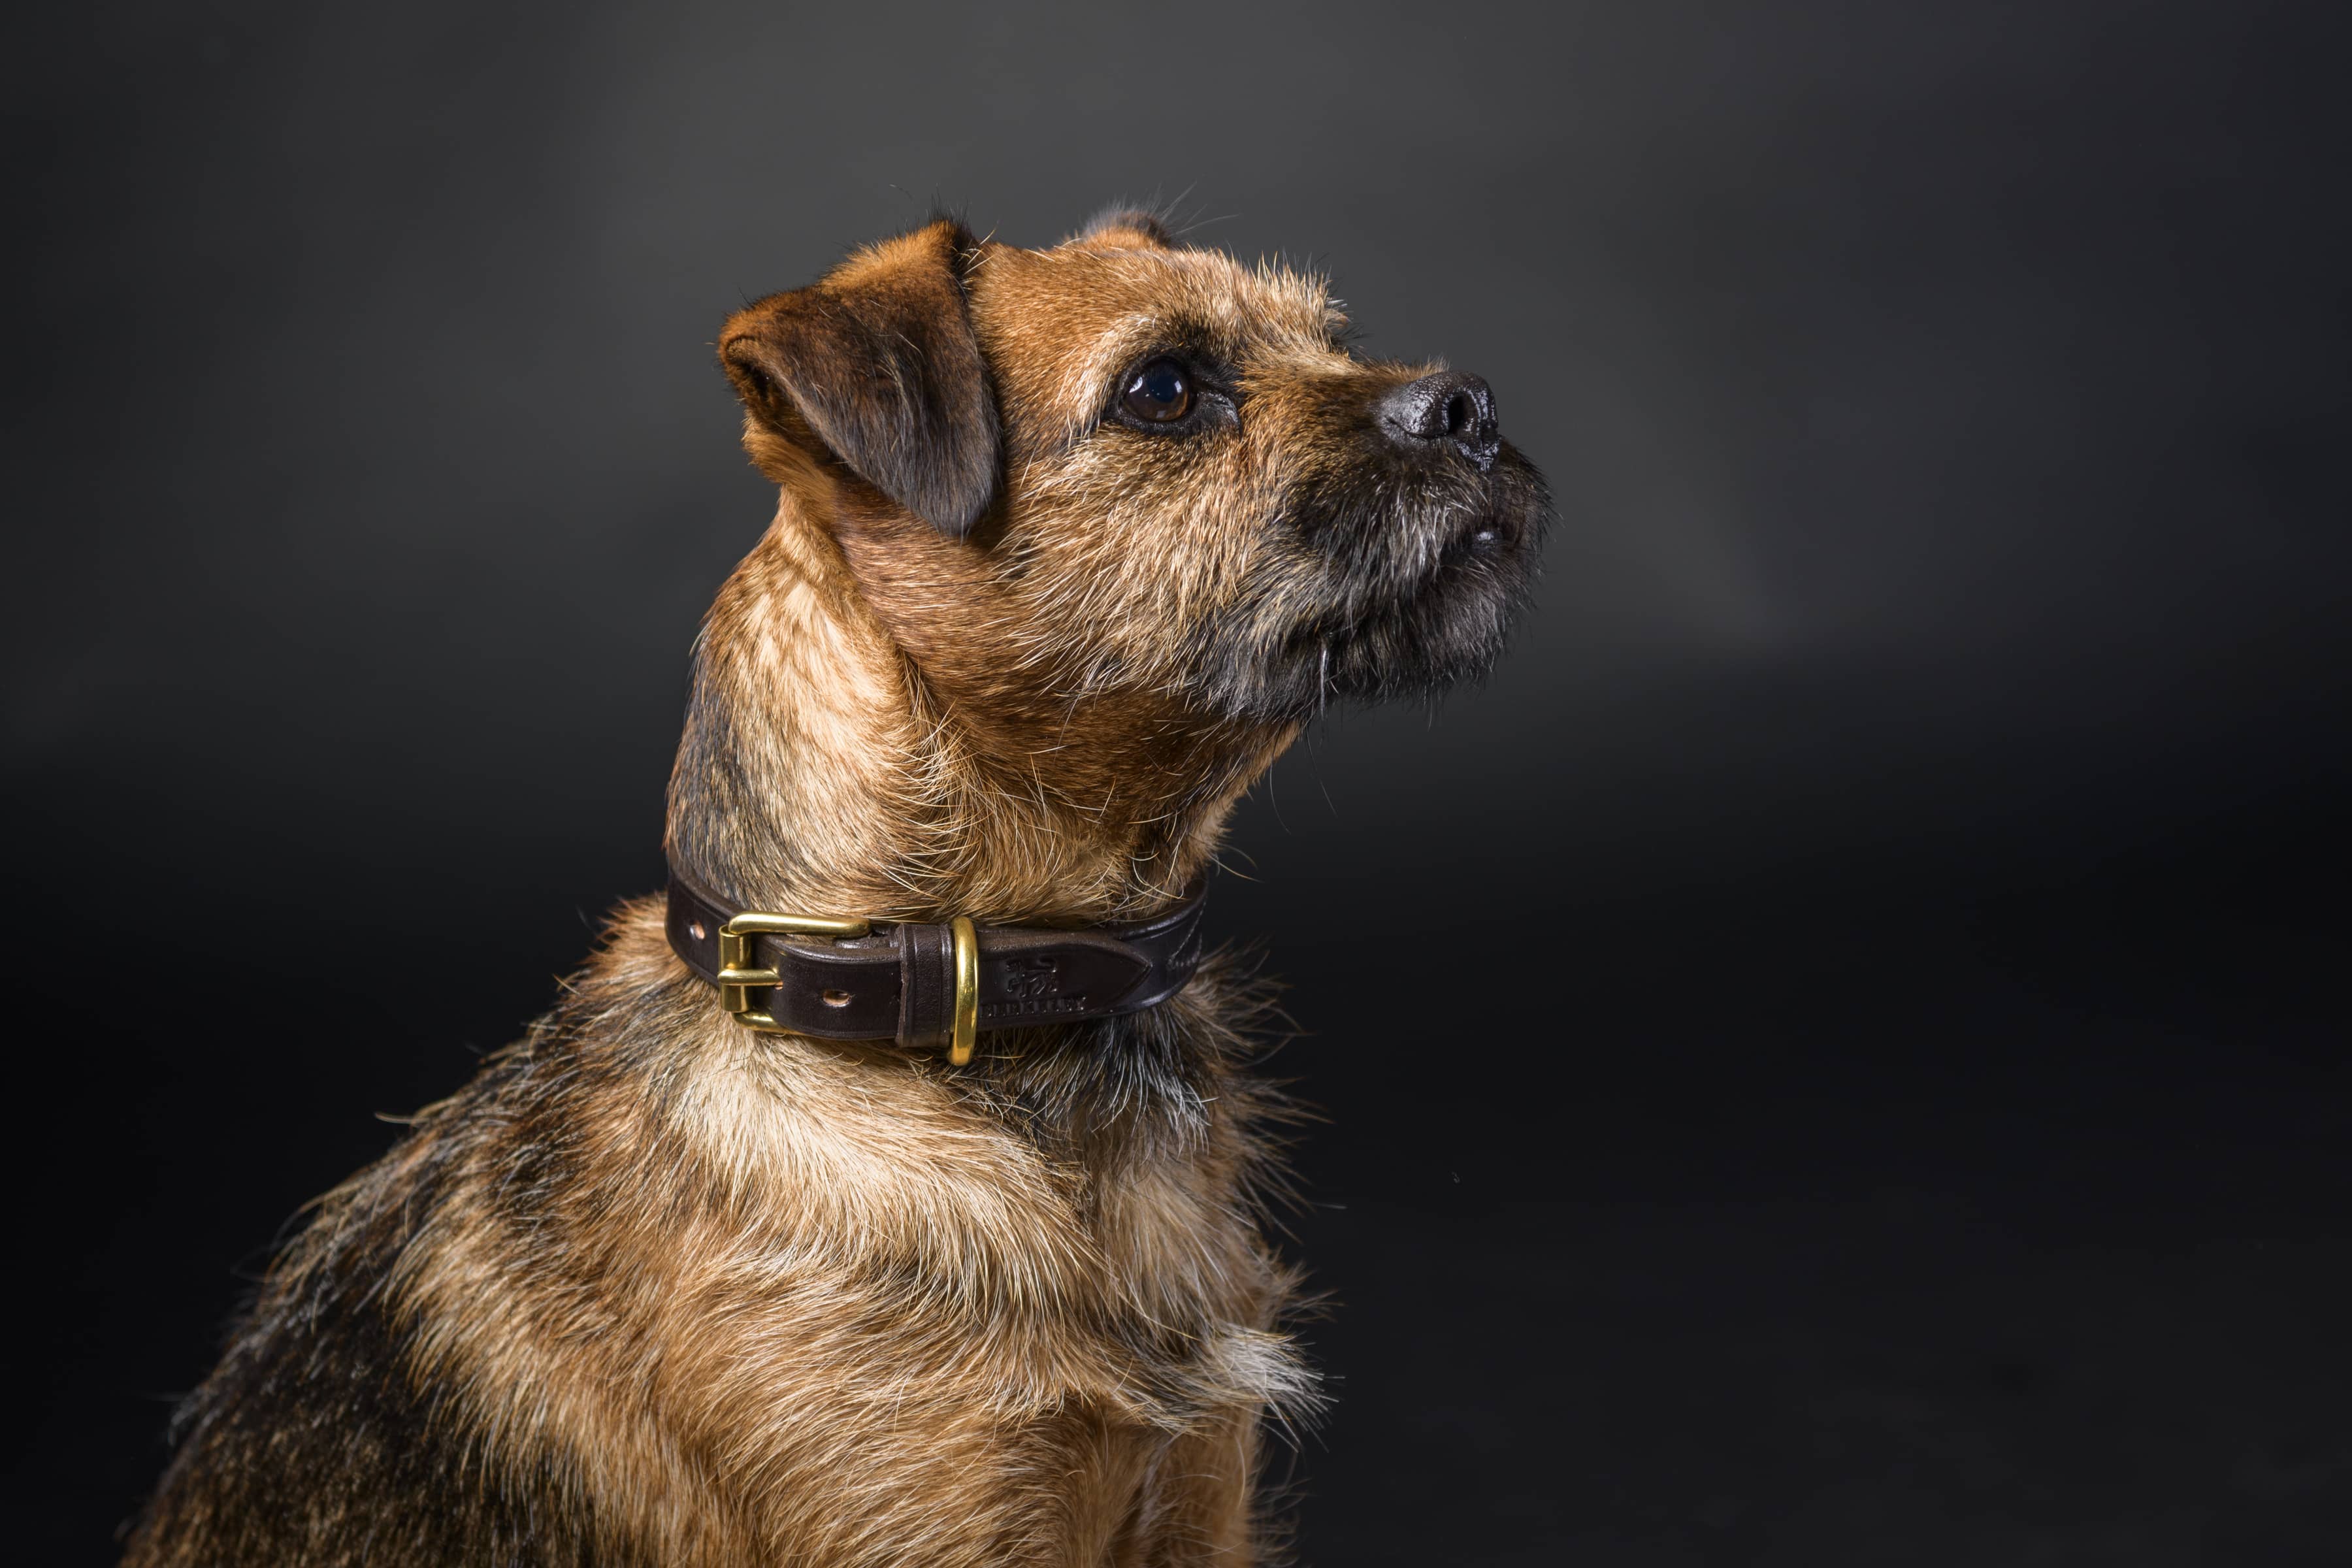 Luxury Leather Dog Collars